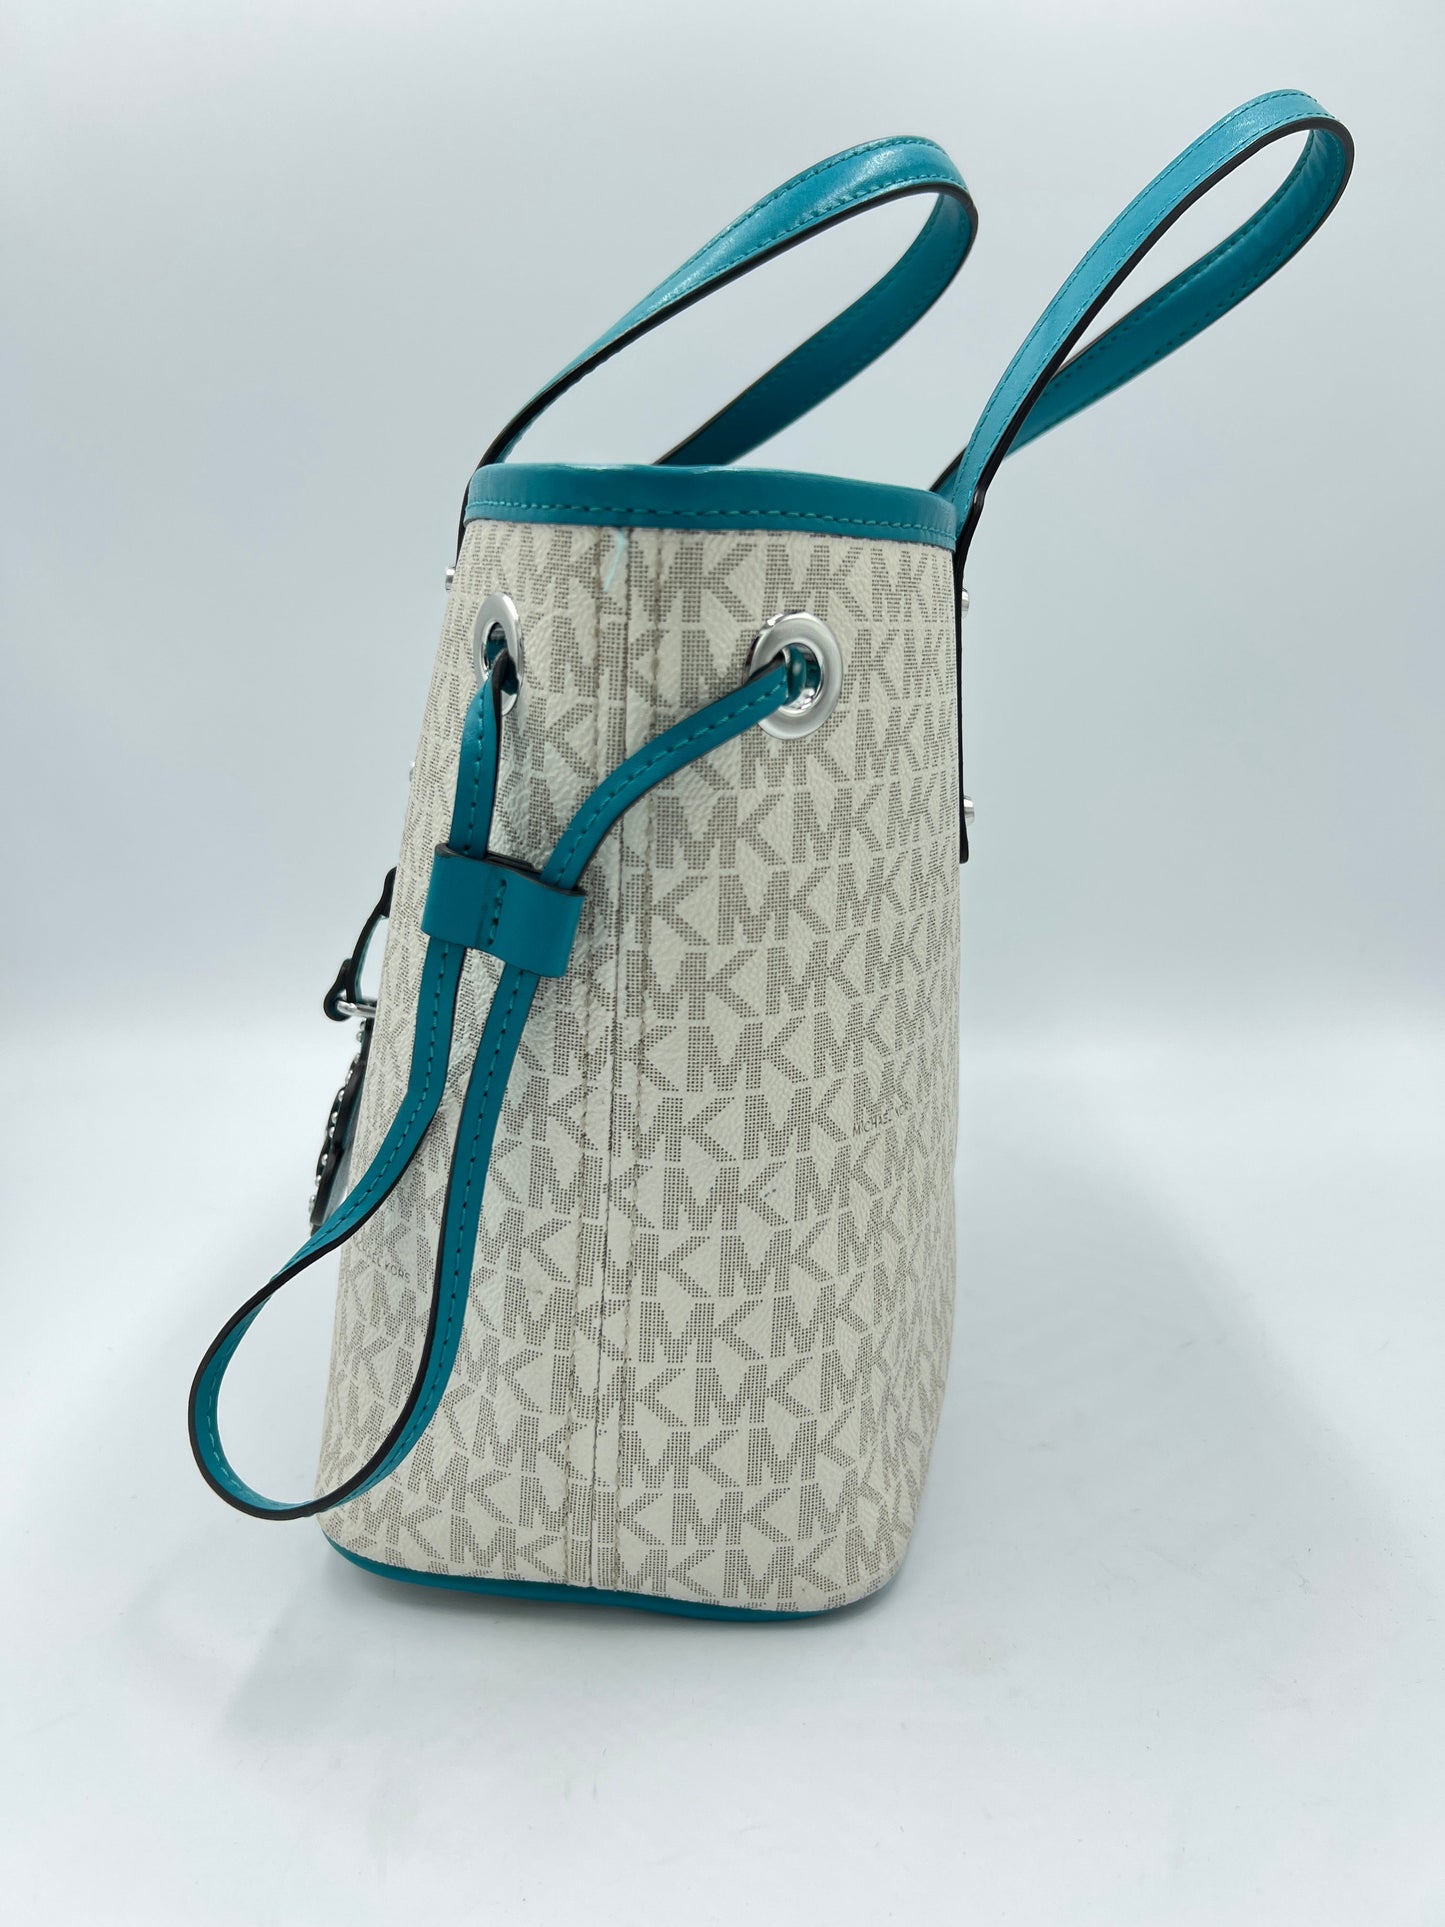 Tote / Handbag Designer By Michael Kors